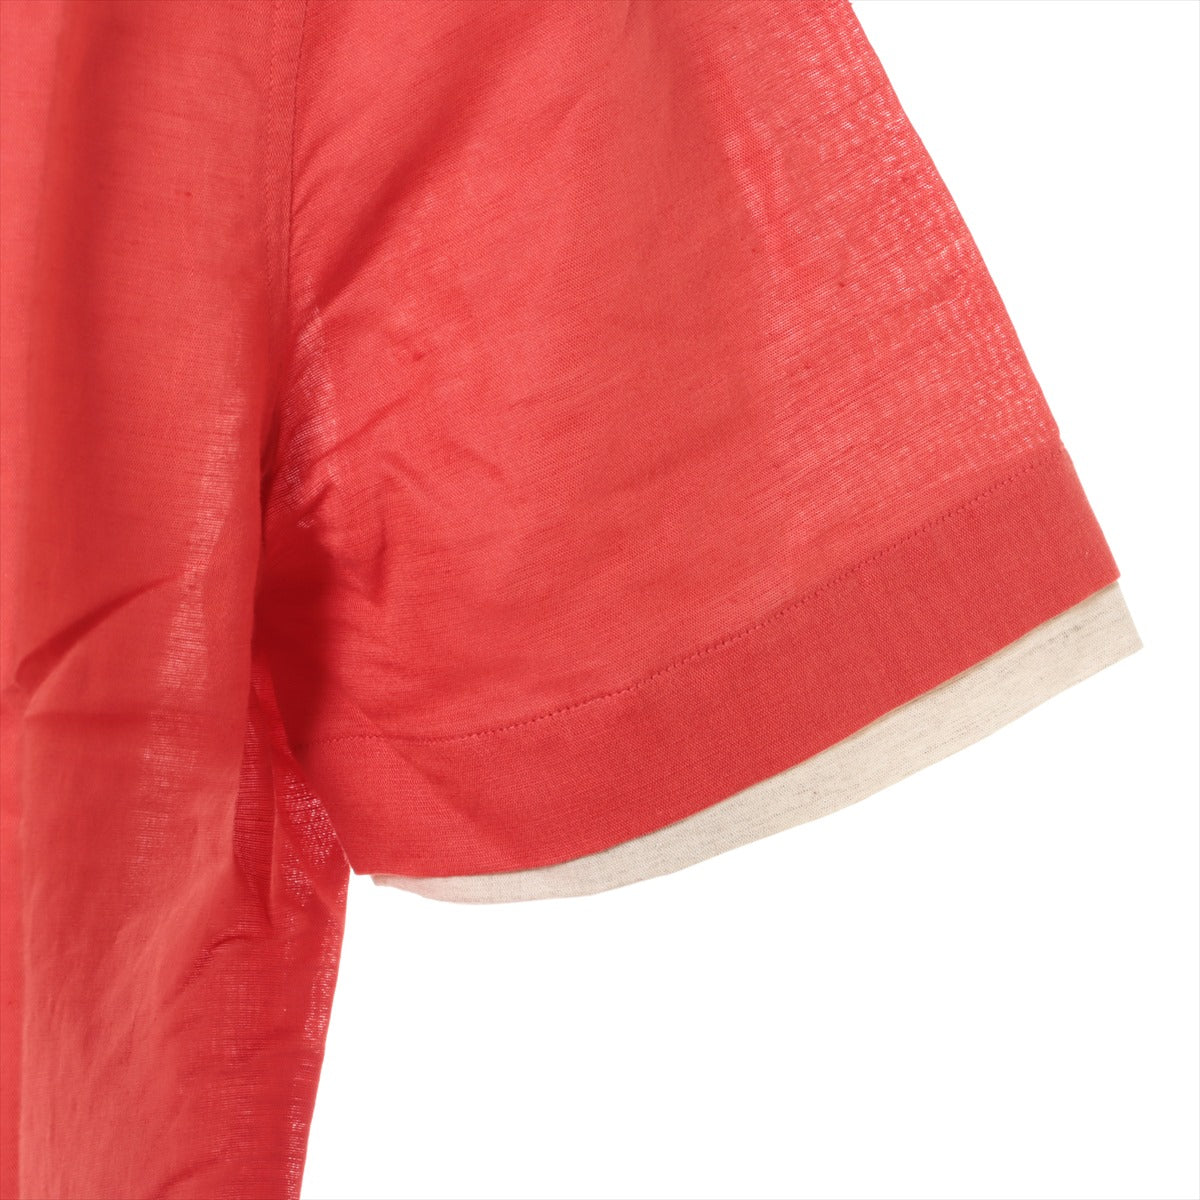 Hermès Cotton & linen Shirt 39 Men's Red  Short sleeves